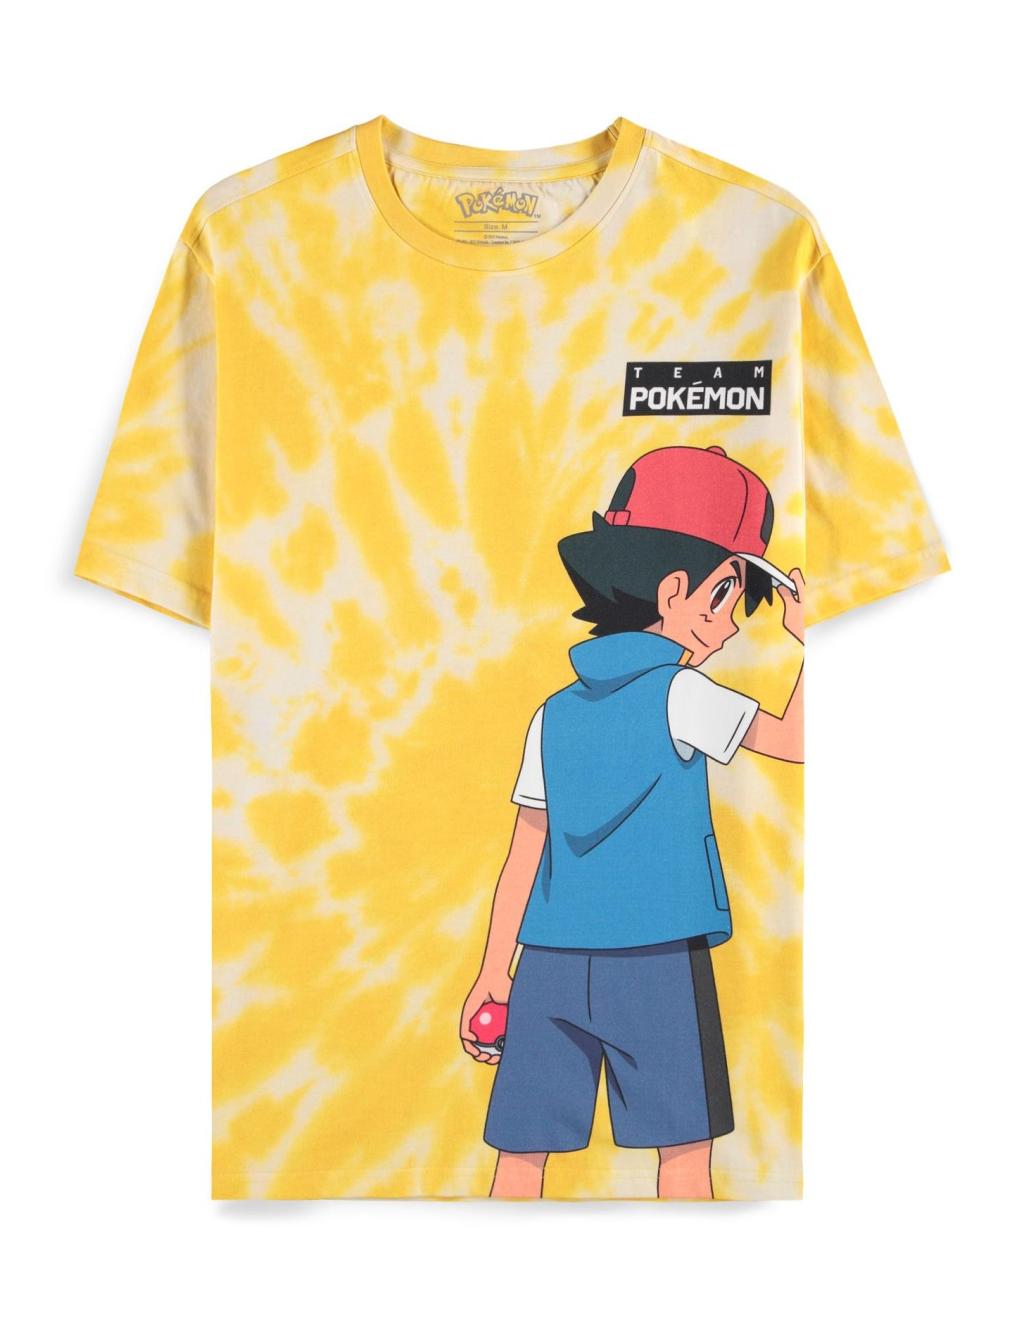 POKEMON - Ash and Pikachu - Men's T-shirt (M)